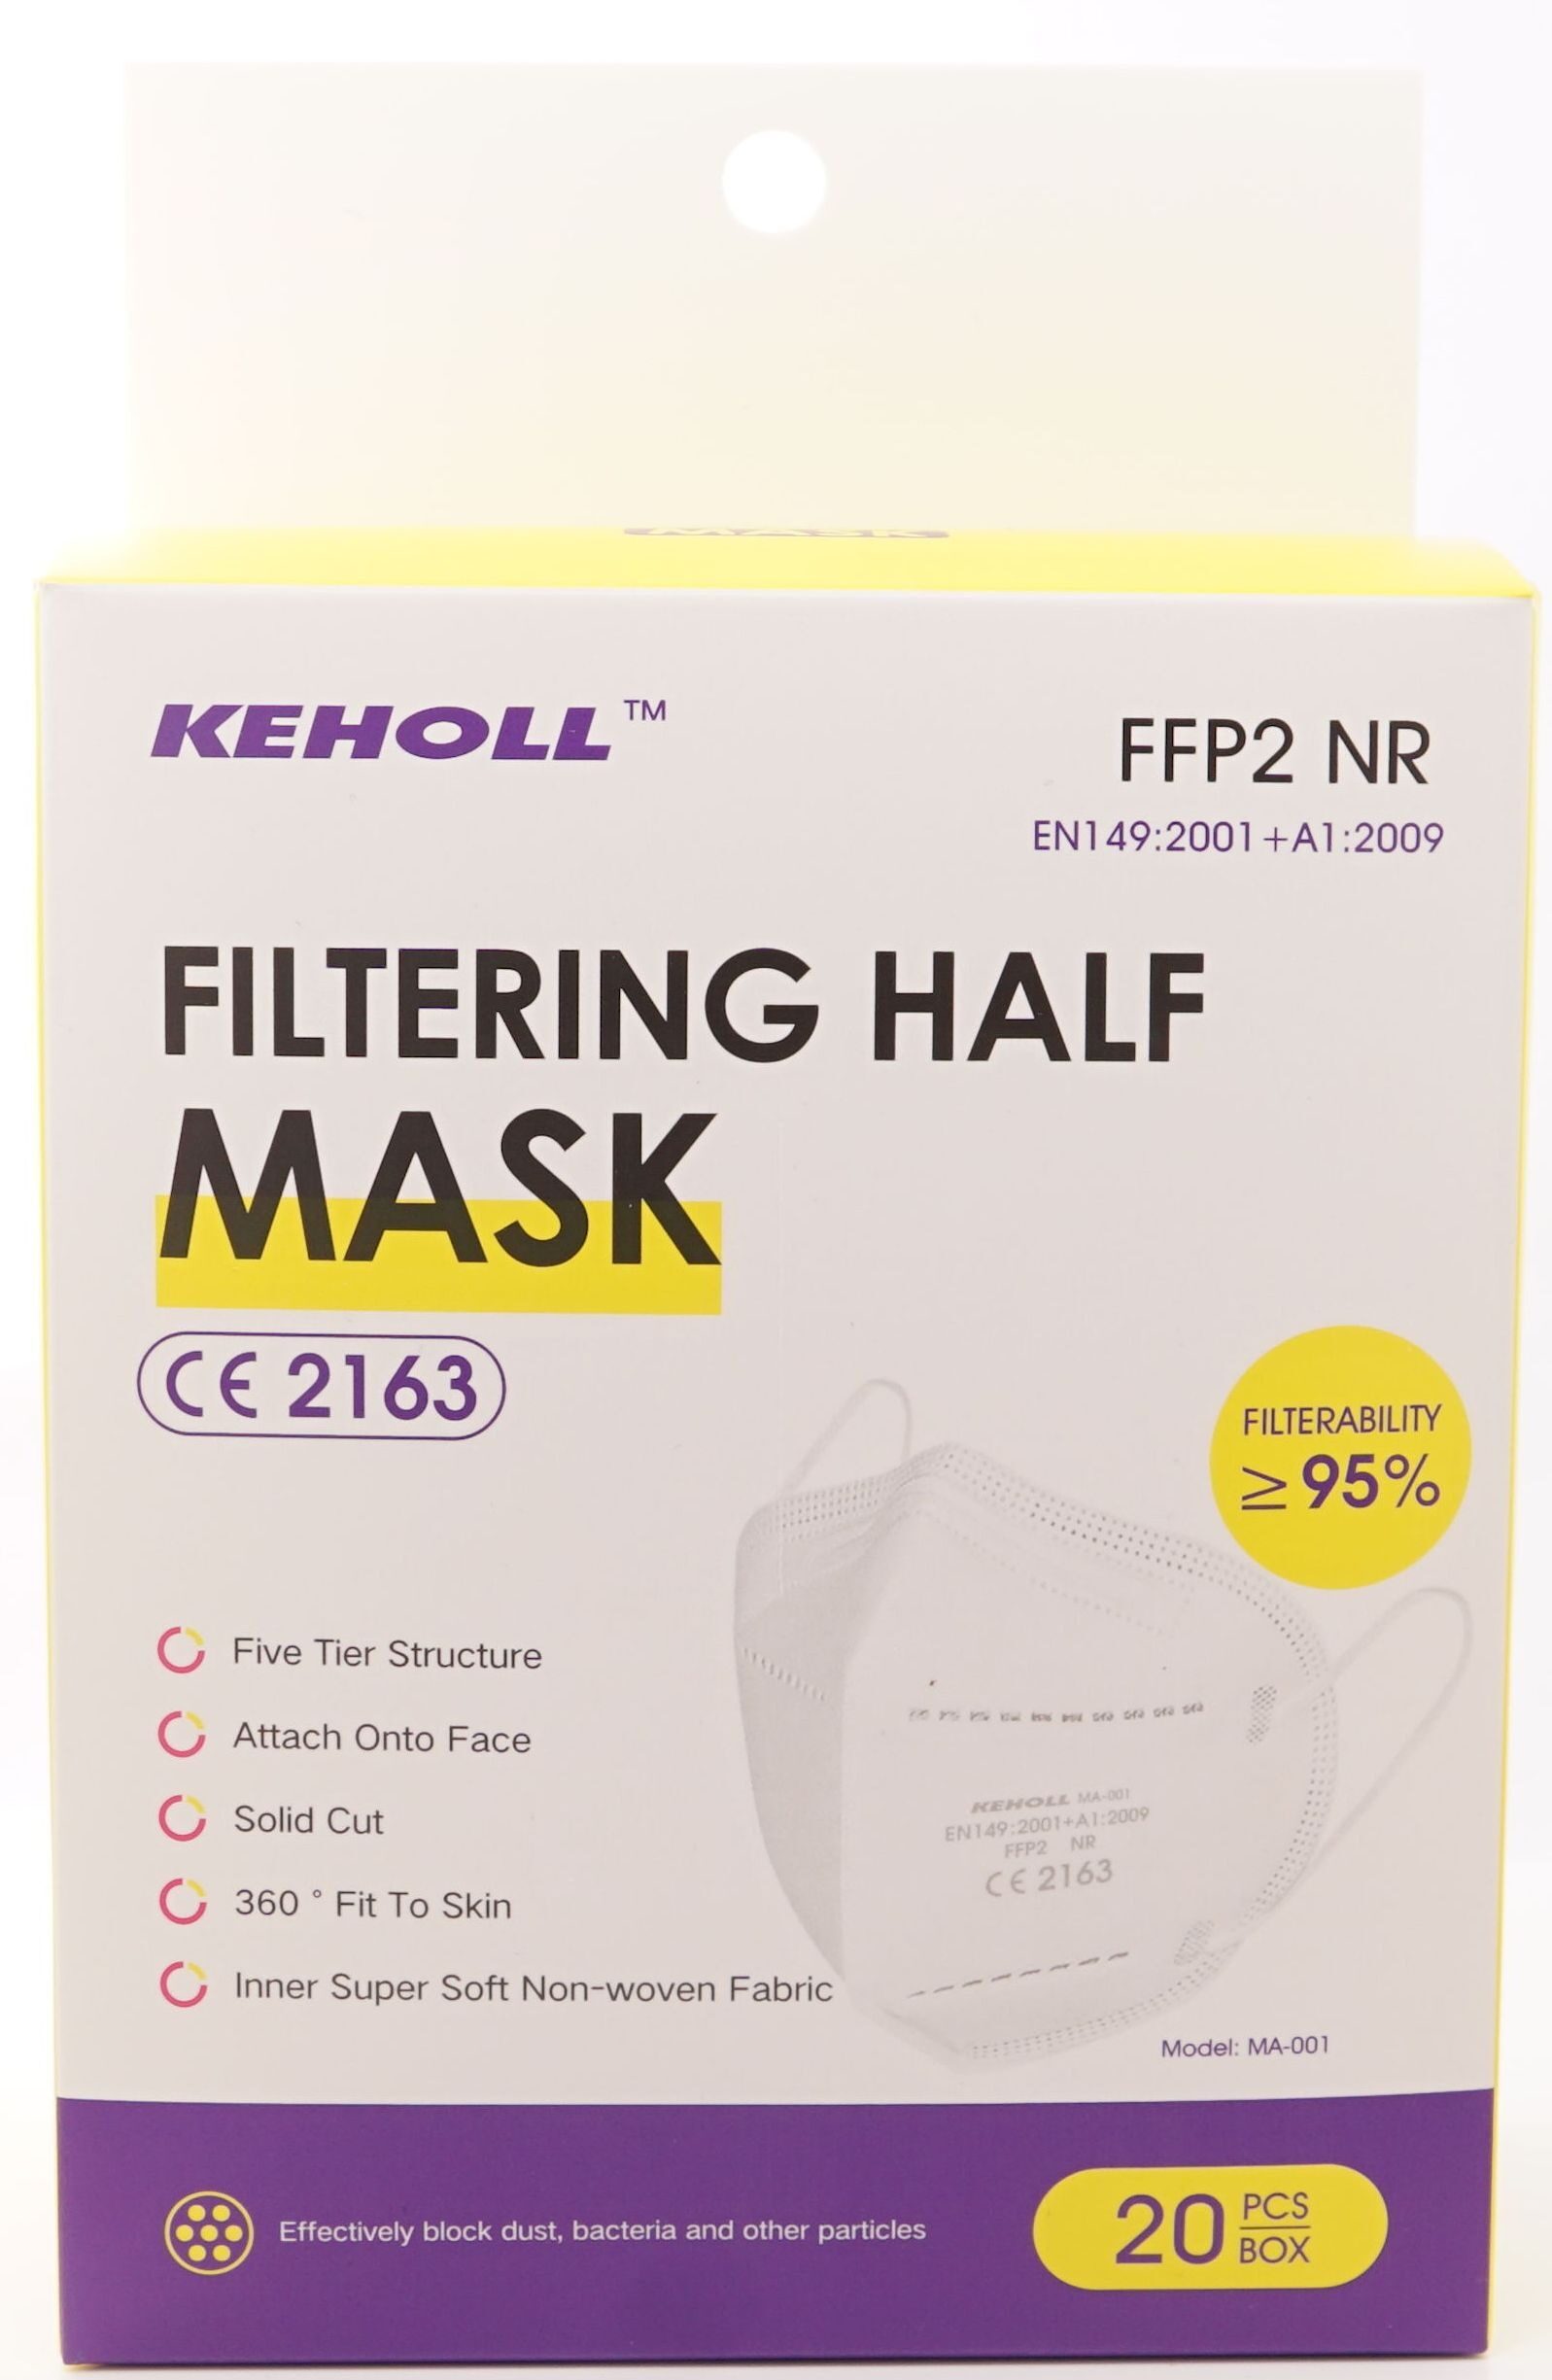 Filtering Half Mask FFP2 - Produit - en